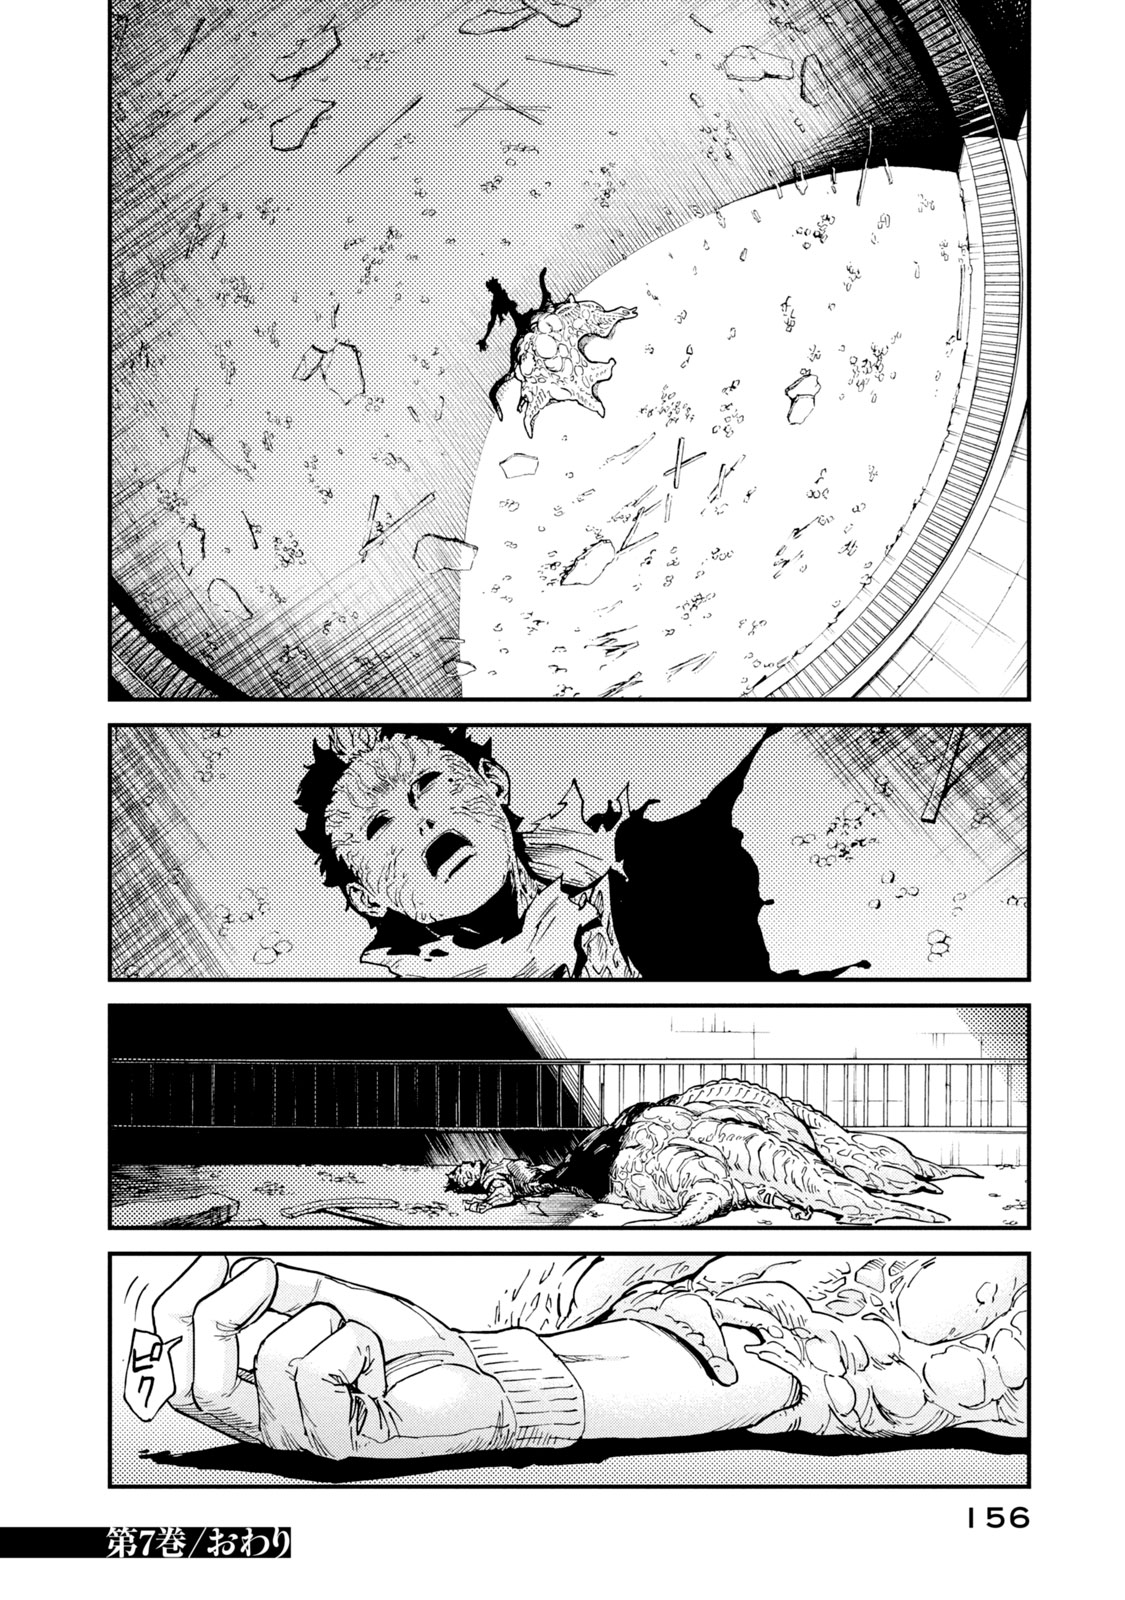 Hataraku Saibou BLACK - Chapter 41 - Page 34